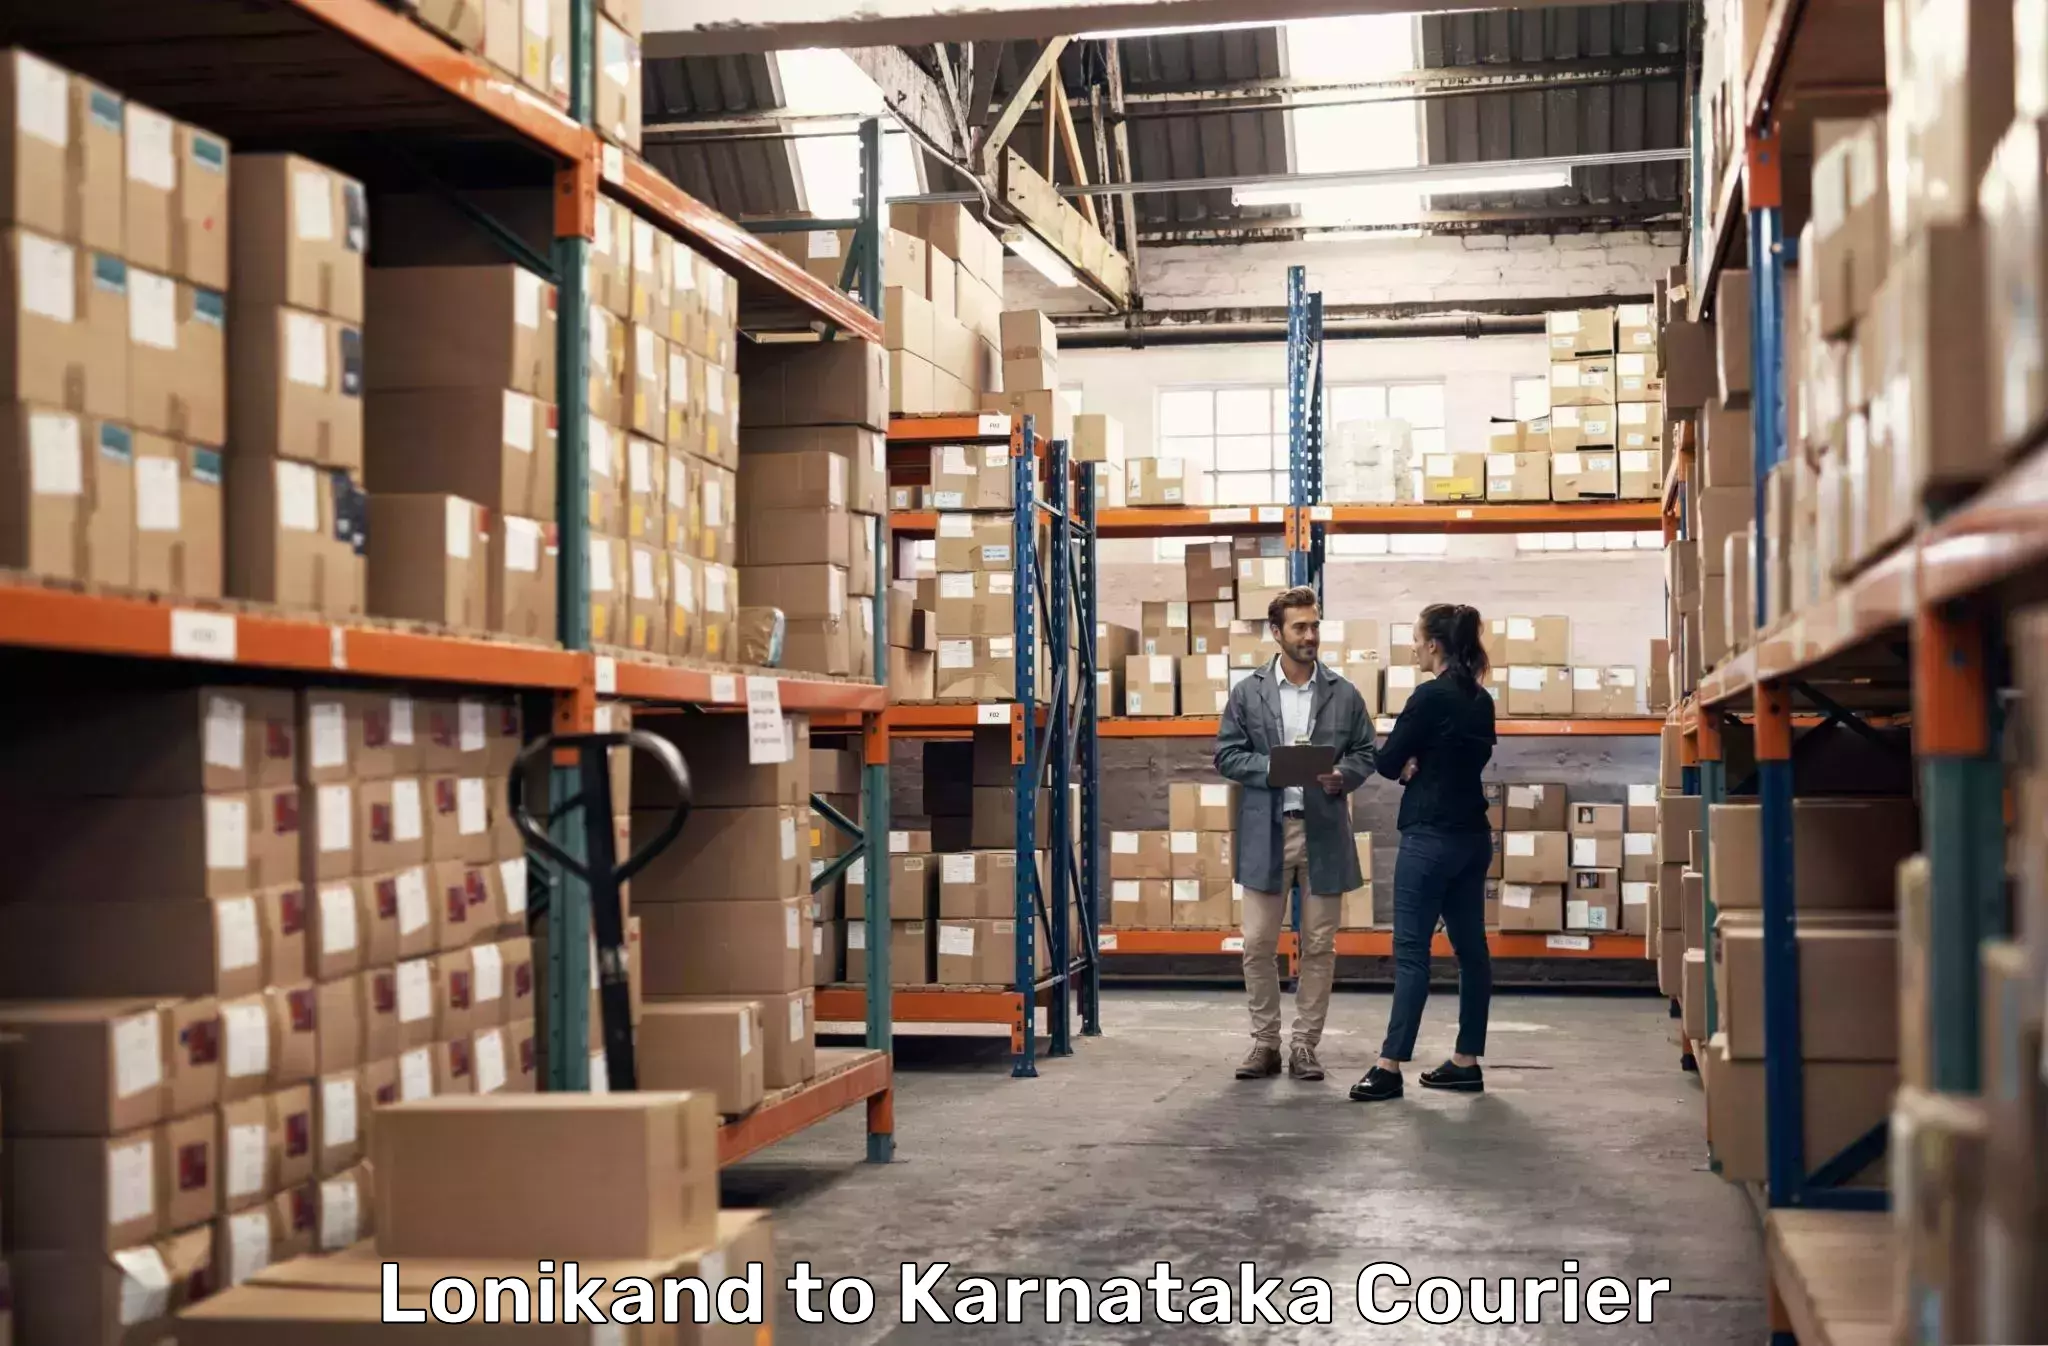 International courier networks Lonikand to Karnataka